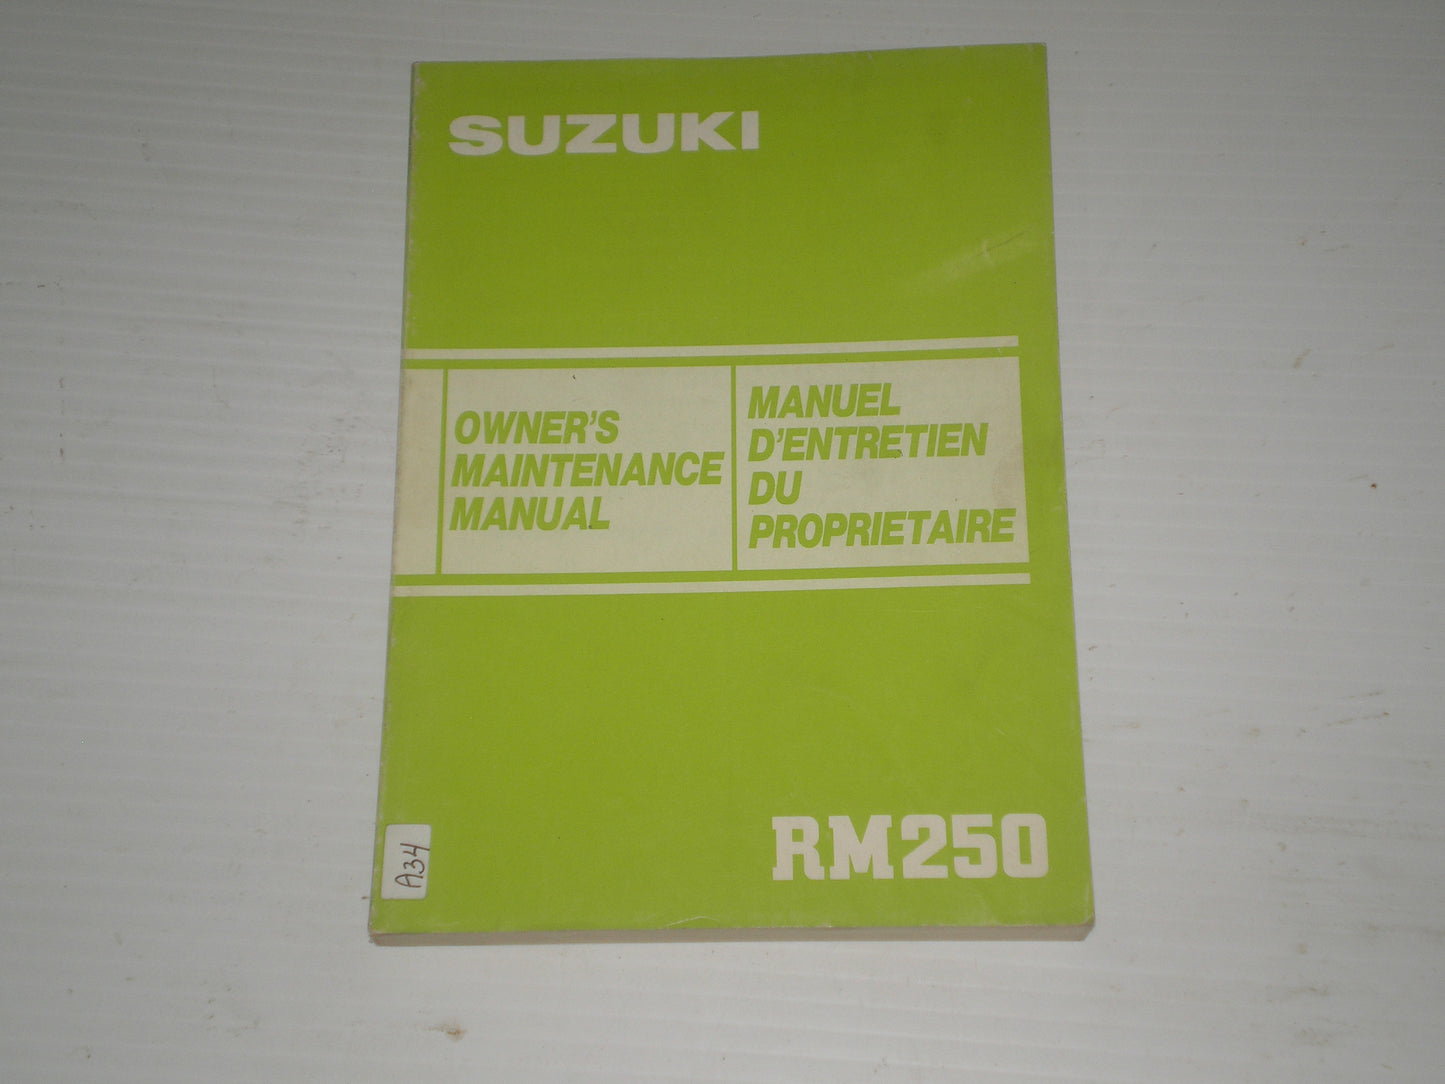 SUZUKI RM250 1985  Owner's Maintenance Manual  99011-14621-01B  #A34